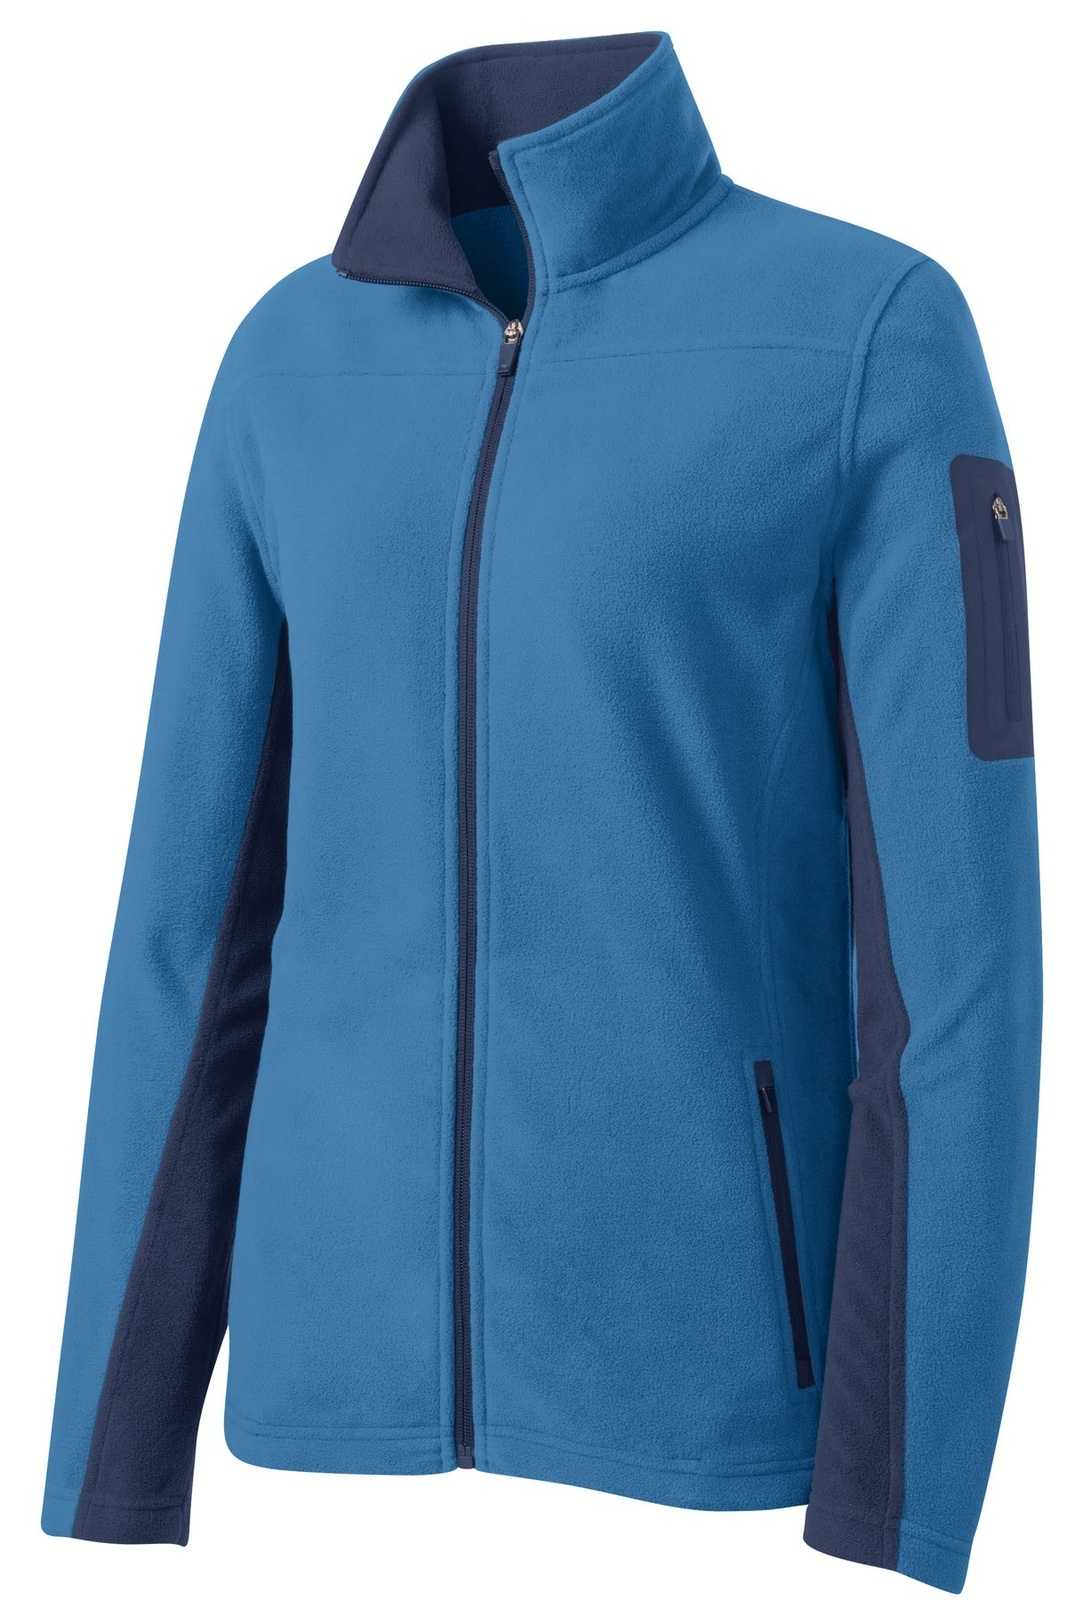 Port Authority L233 Ladies Summit Fleece Full-Zip Jacket - Regal Blue Dress Blue Navy - HIT a Double - 5